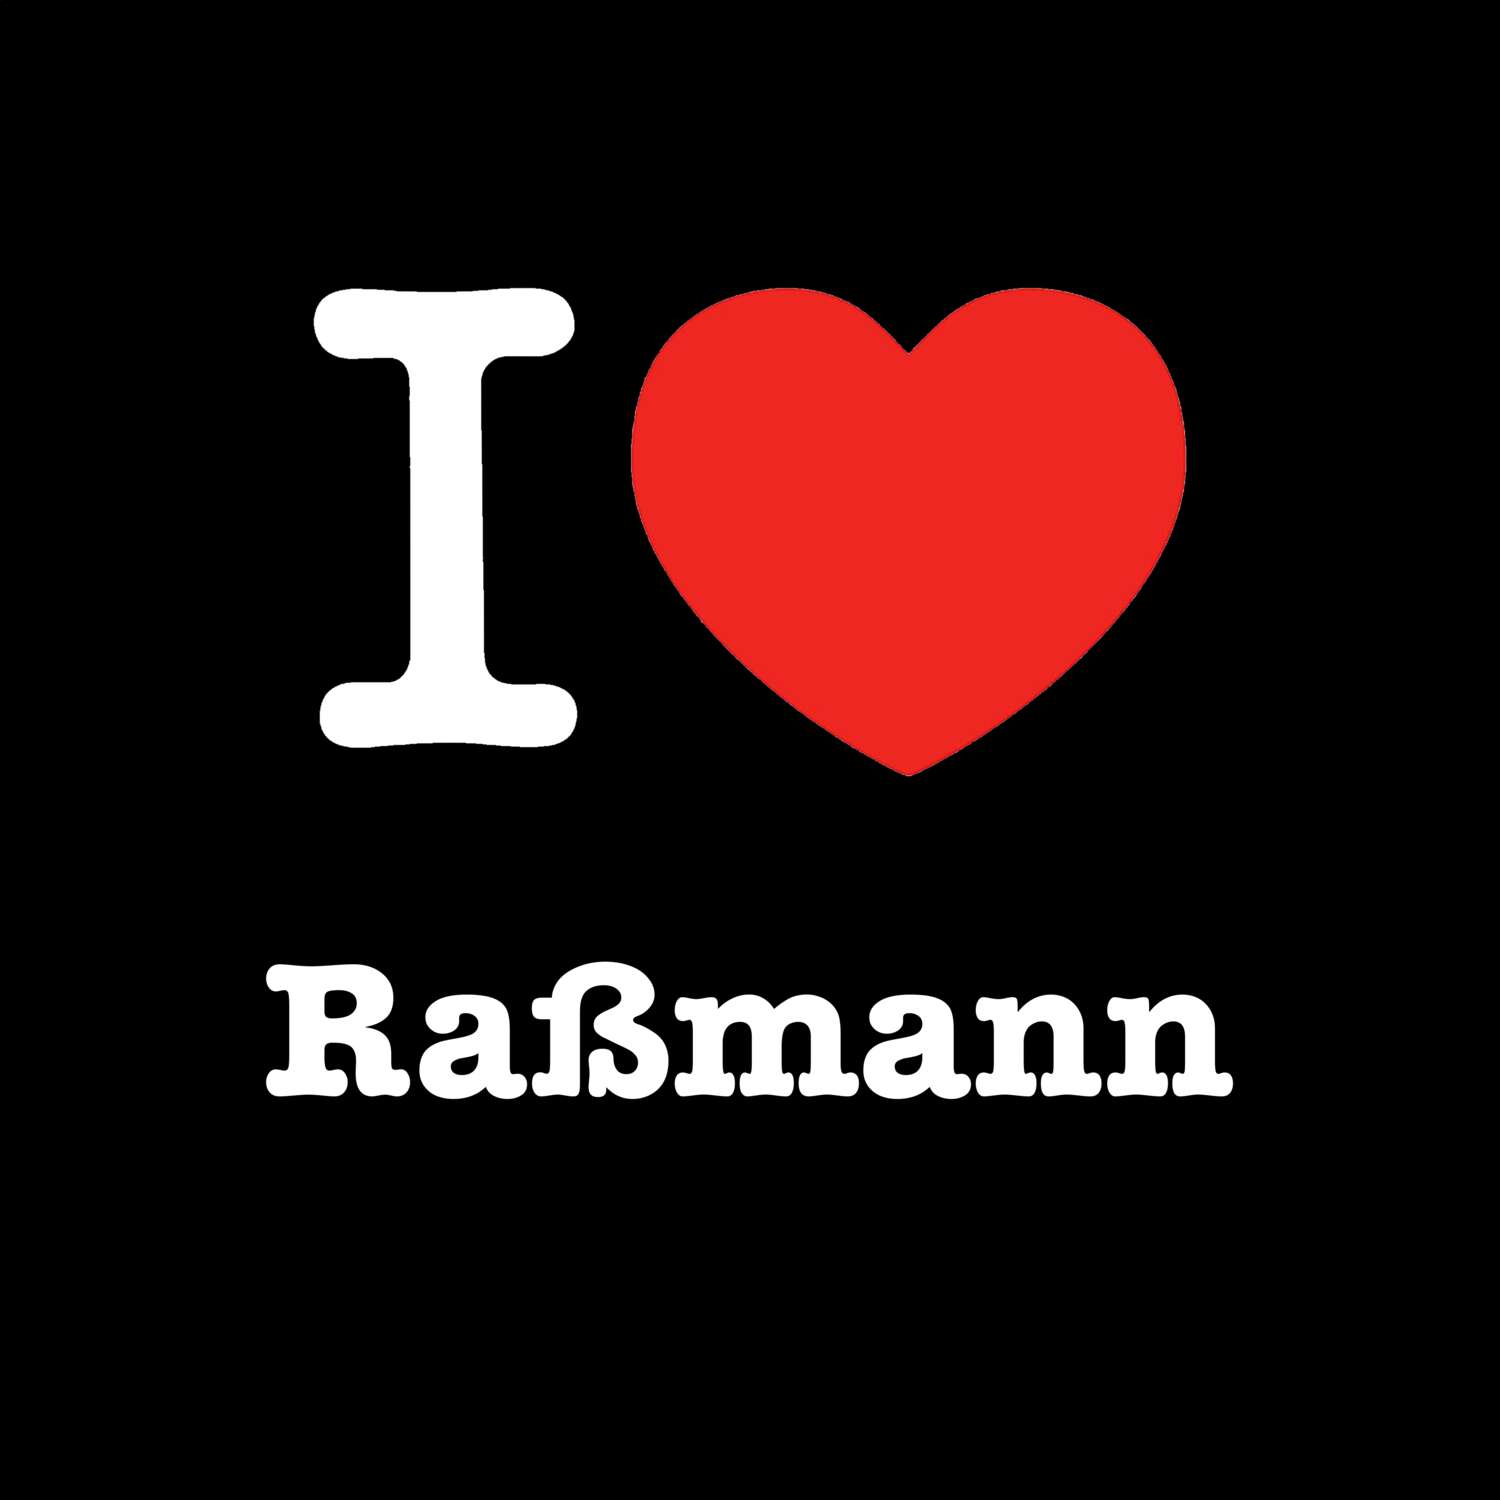 Raßmann T-Shirt »I love«